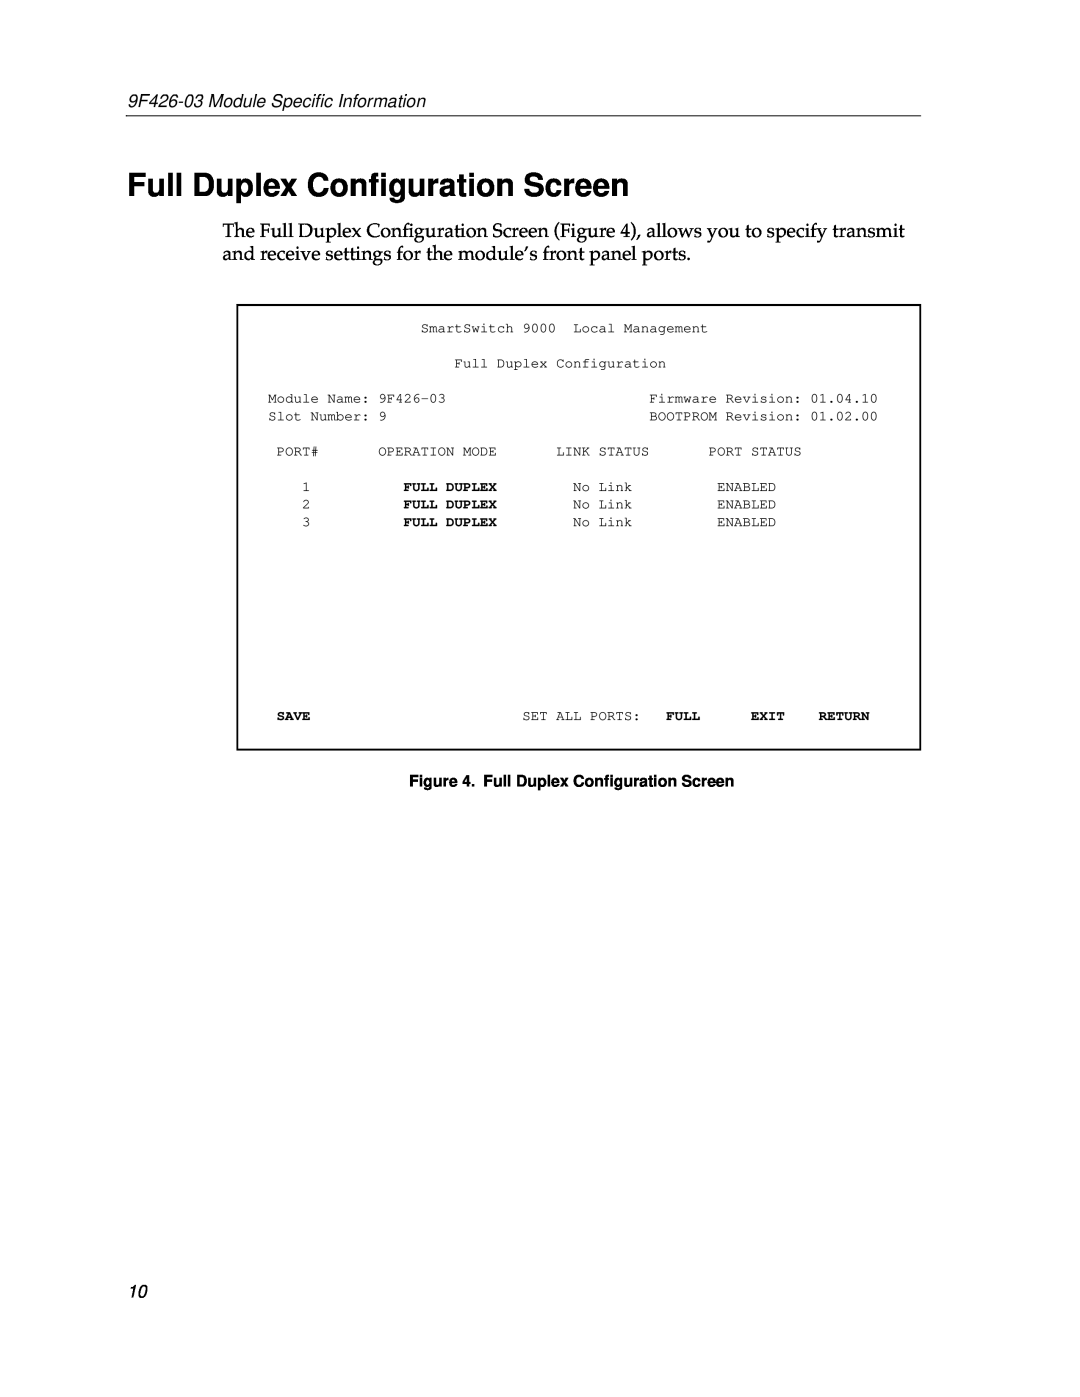 Cabletron Systems appendix Full Duplex Conﬁguration Screen, 9F426-03 Module Speciﬁc Information, Save, Exit, Return 